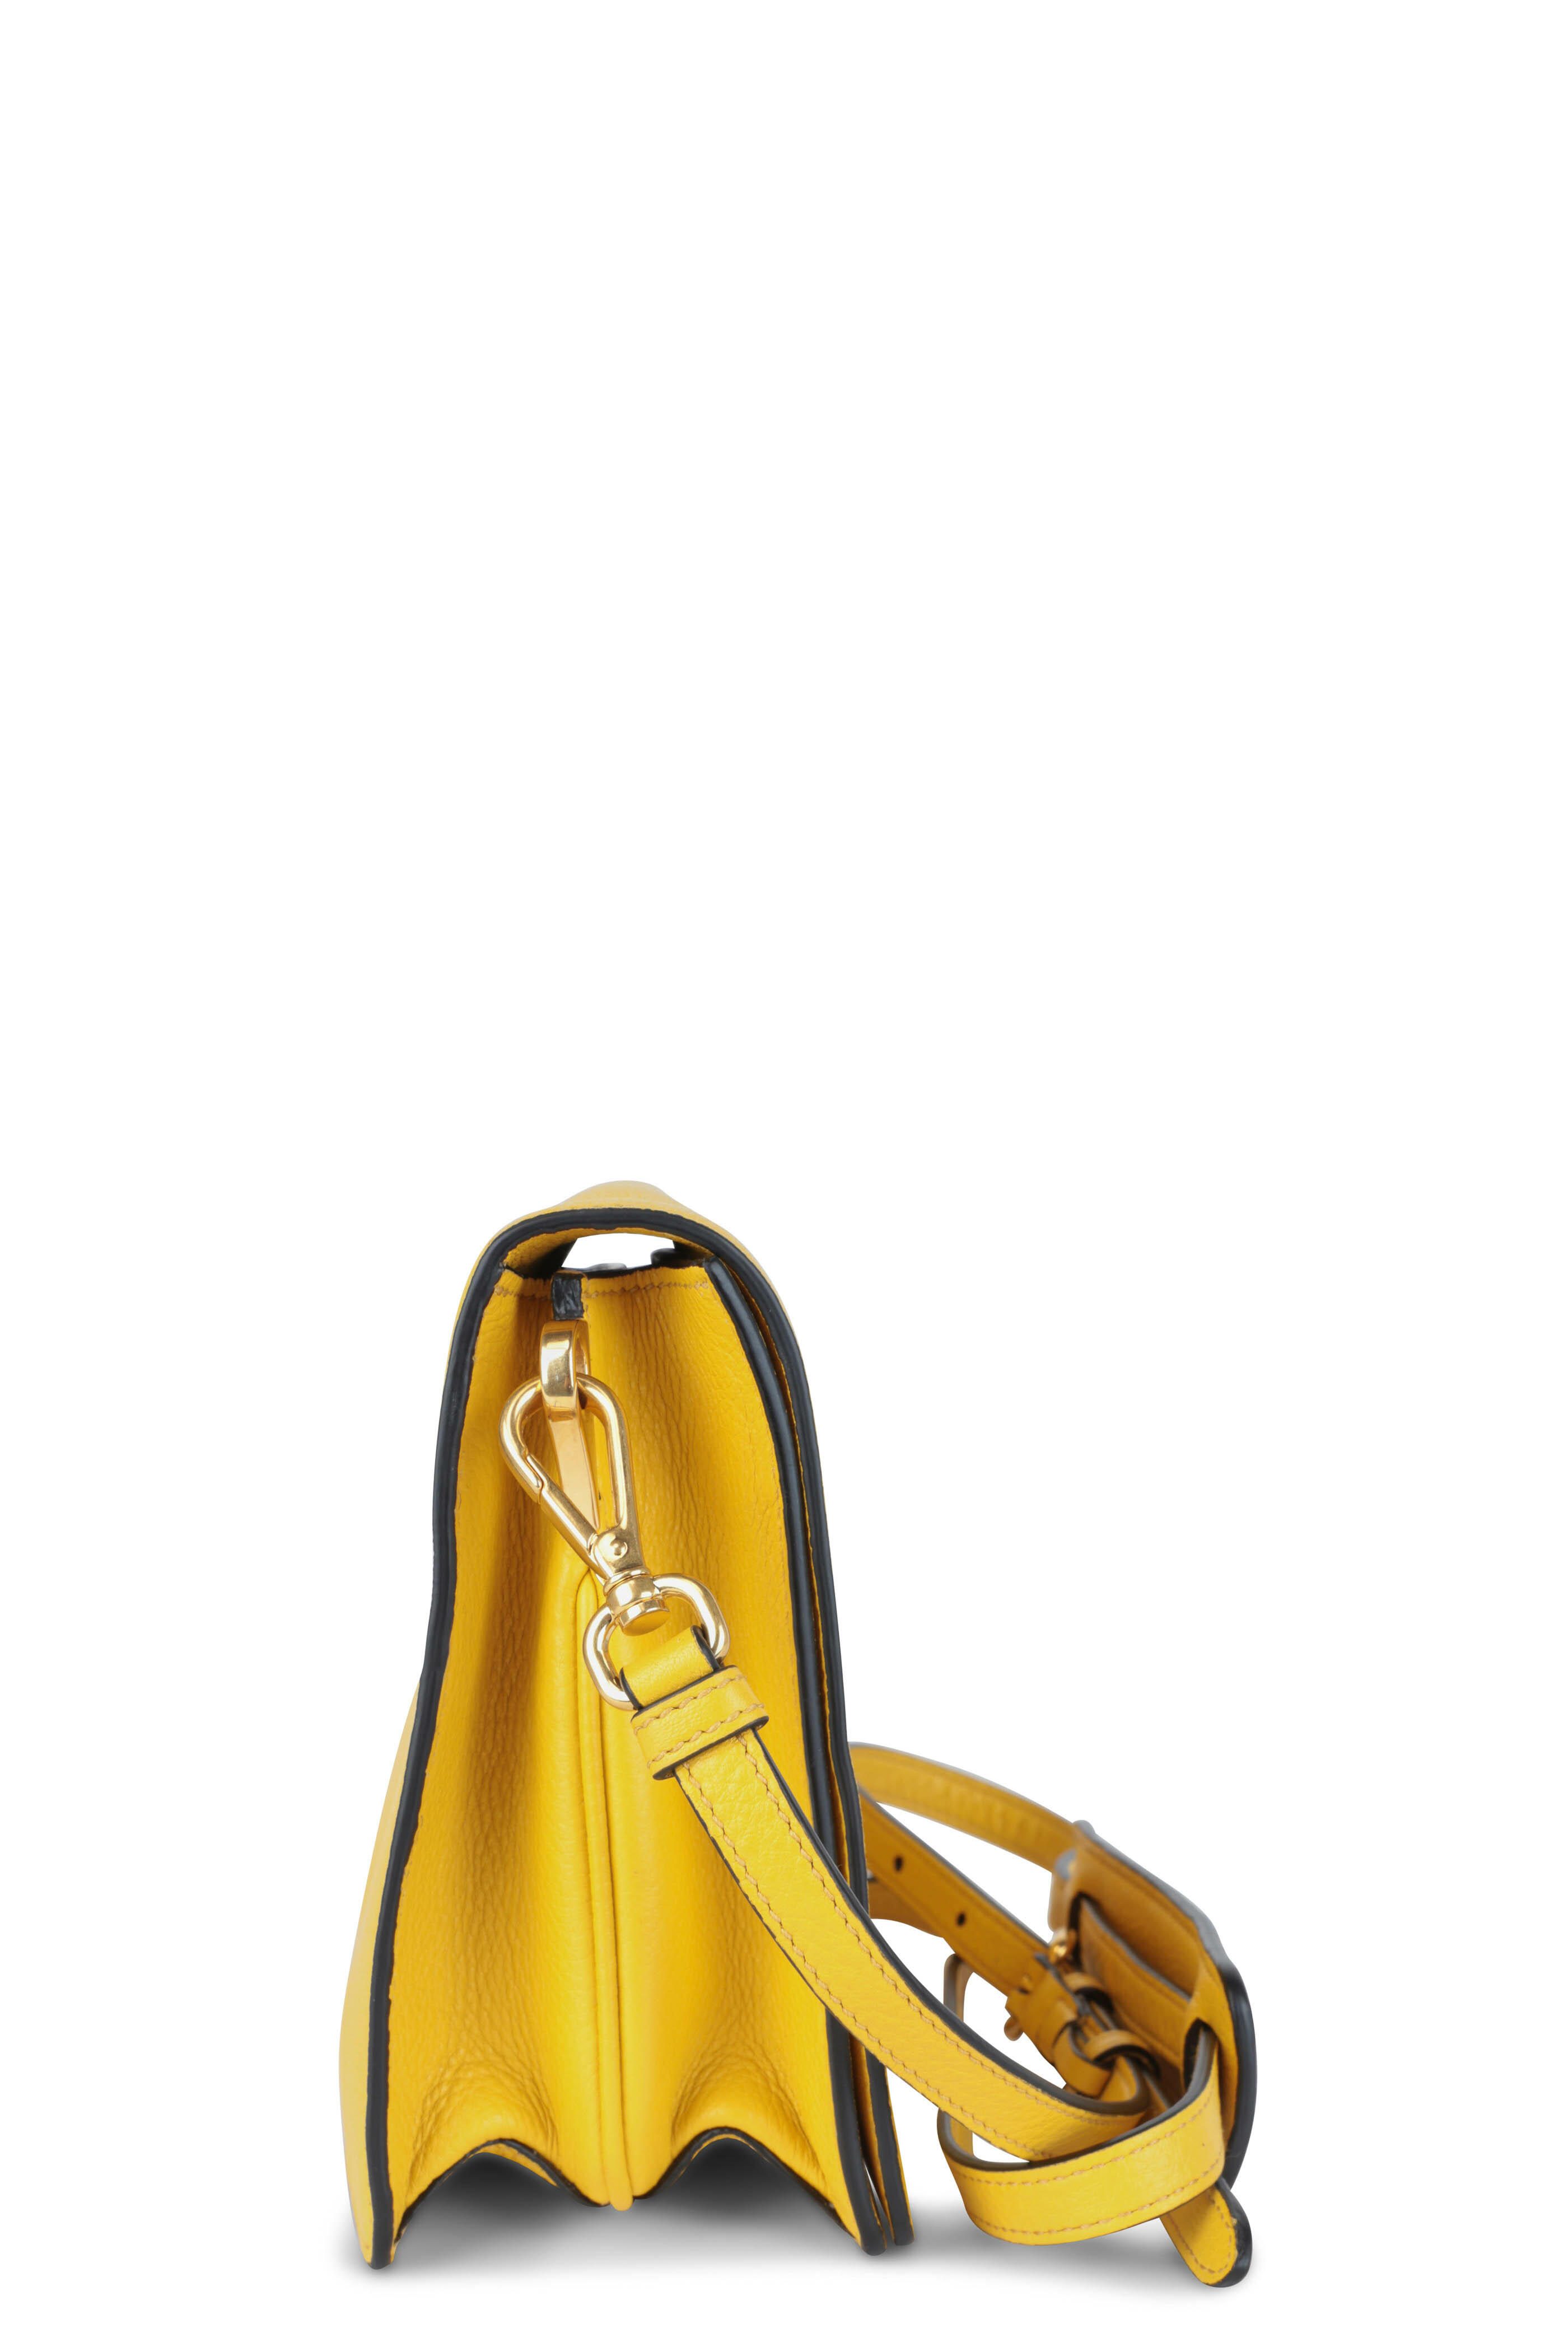 Prada - Yellow Leather Crossbody Bag